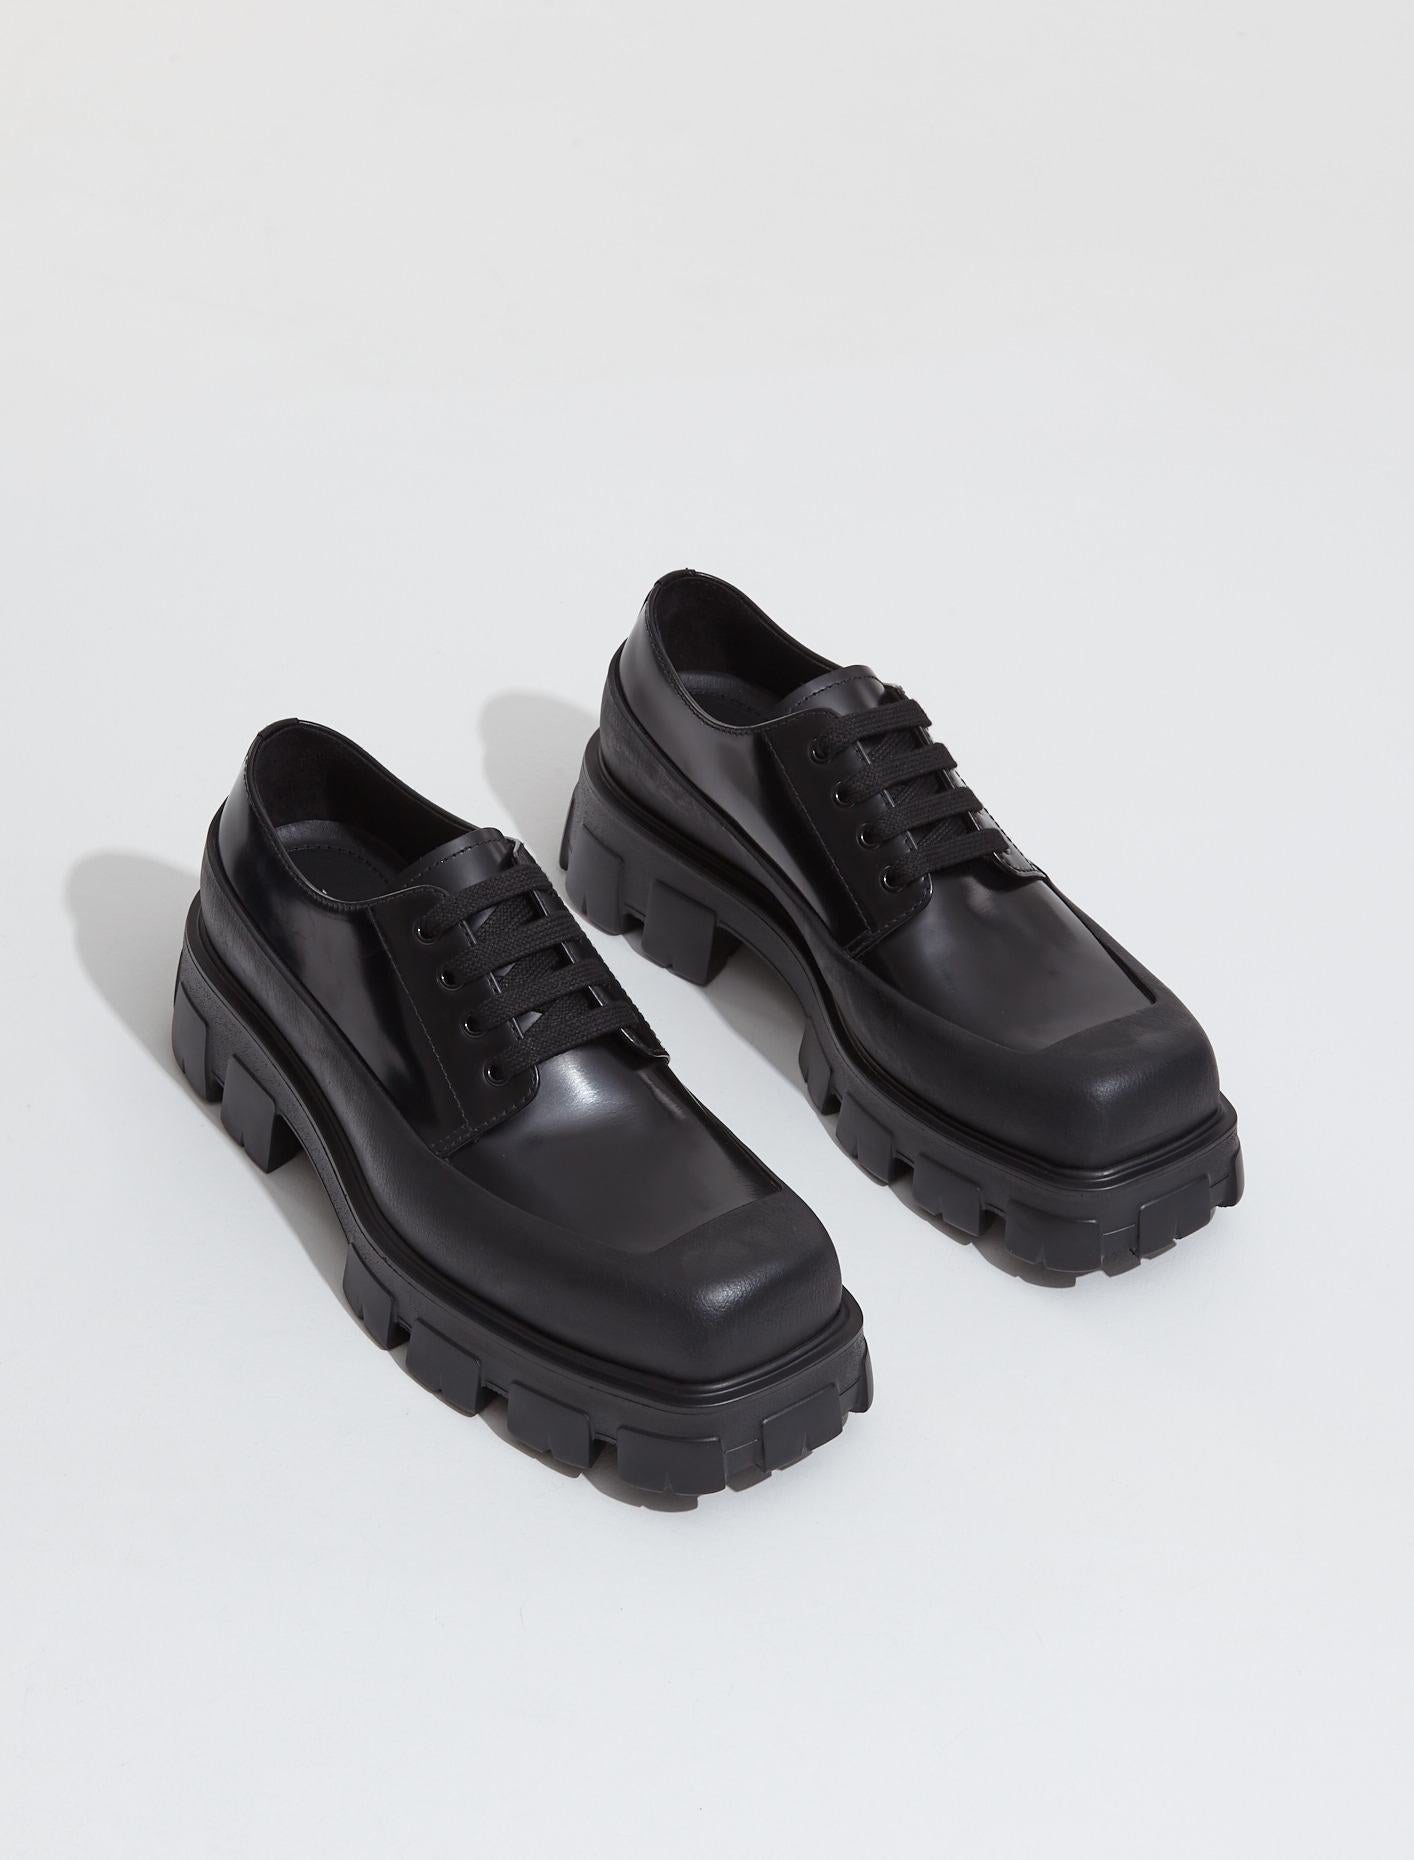 Prada - Monolith Square-Toe Derby Shoes in Black - 2EG411_055_F0002